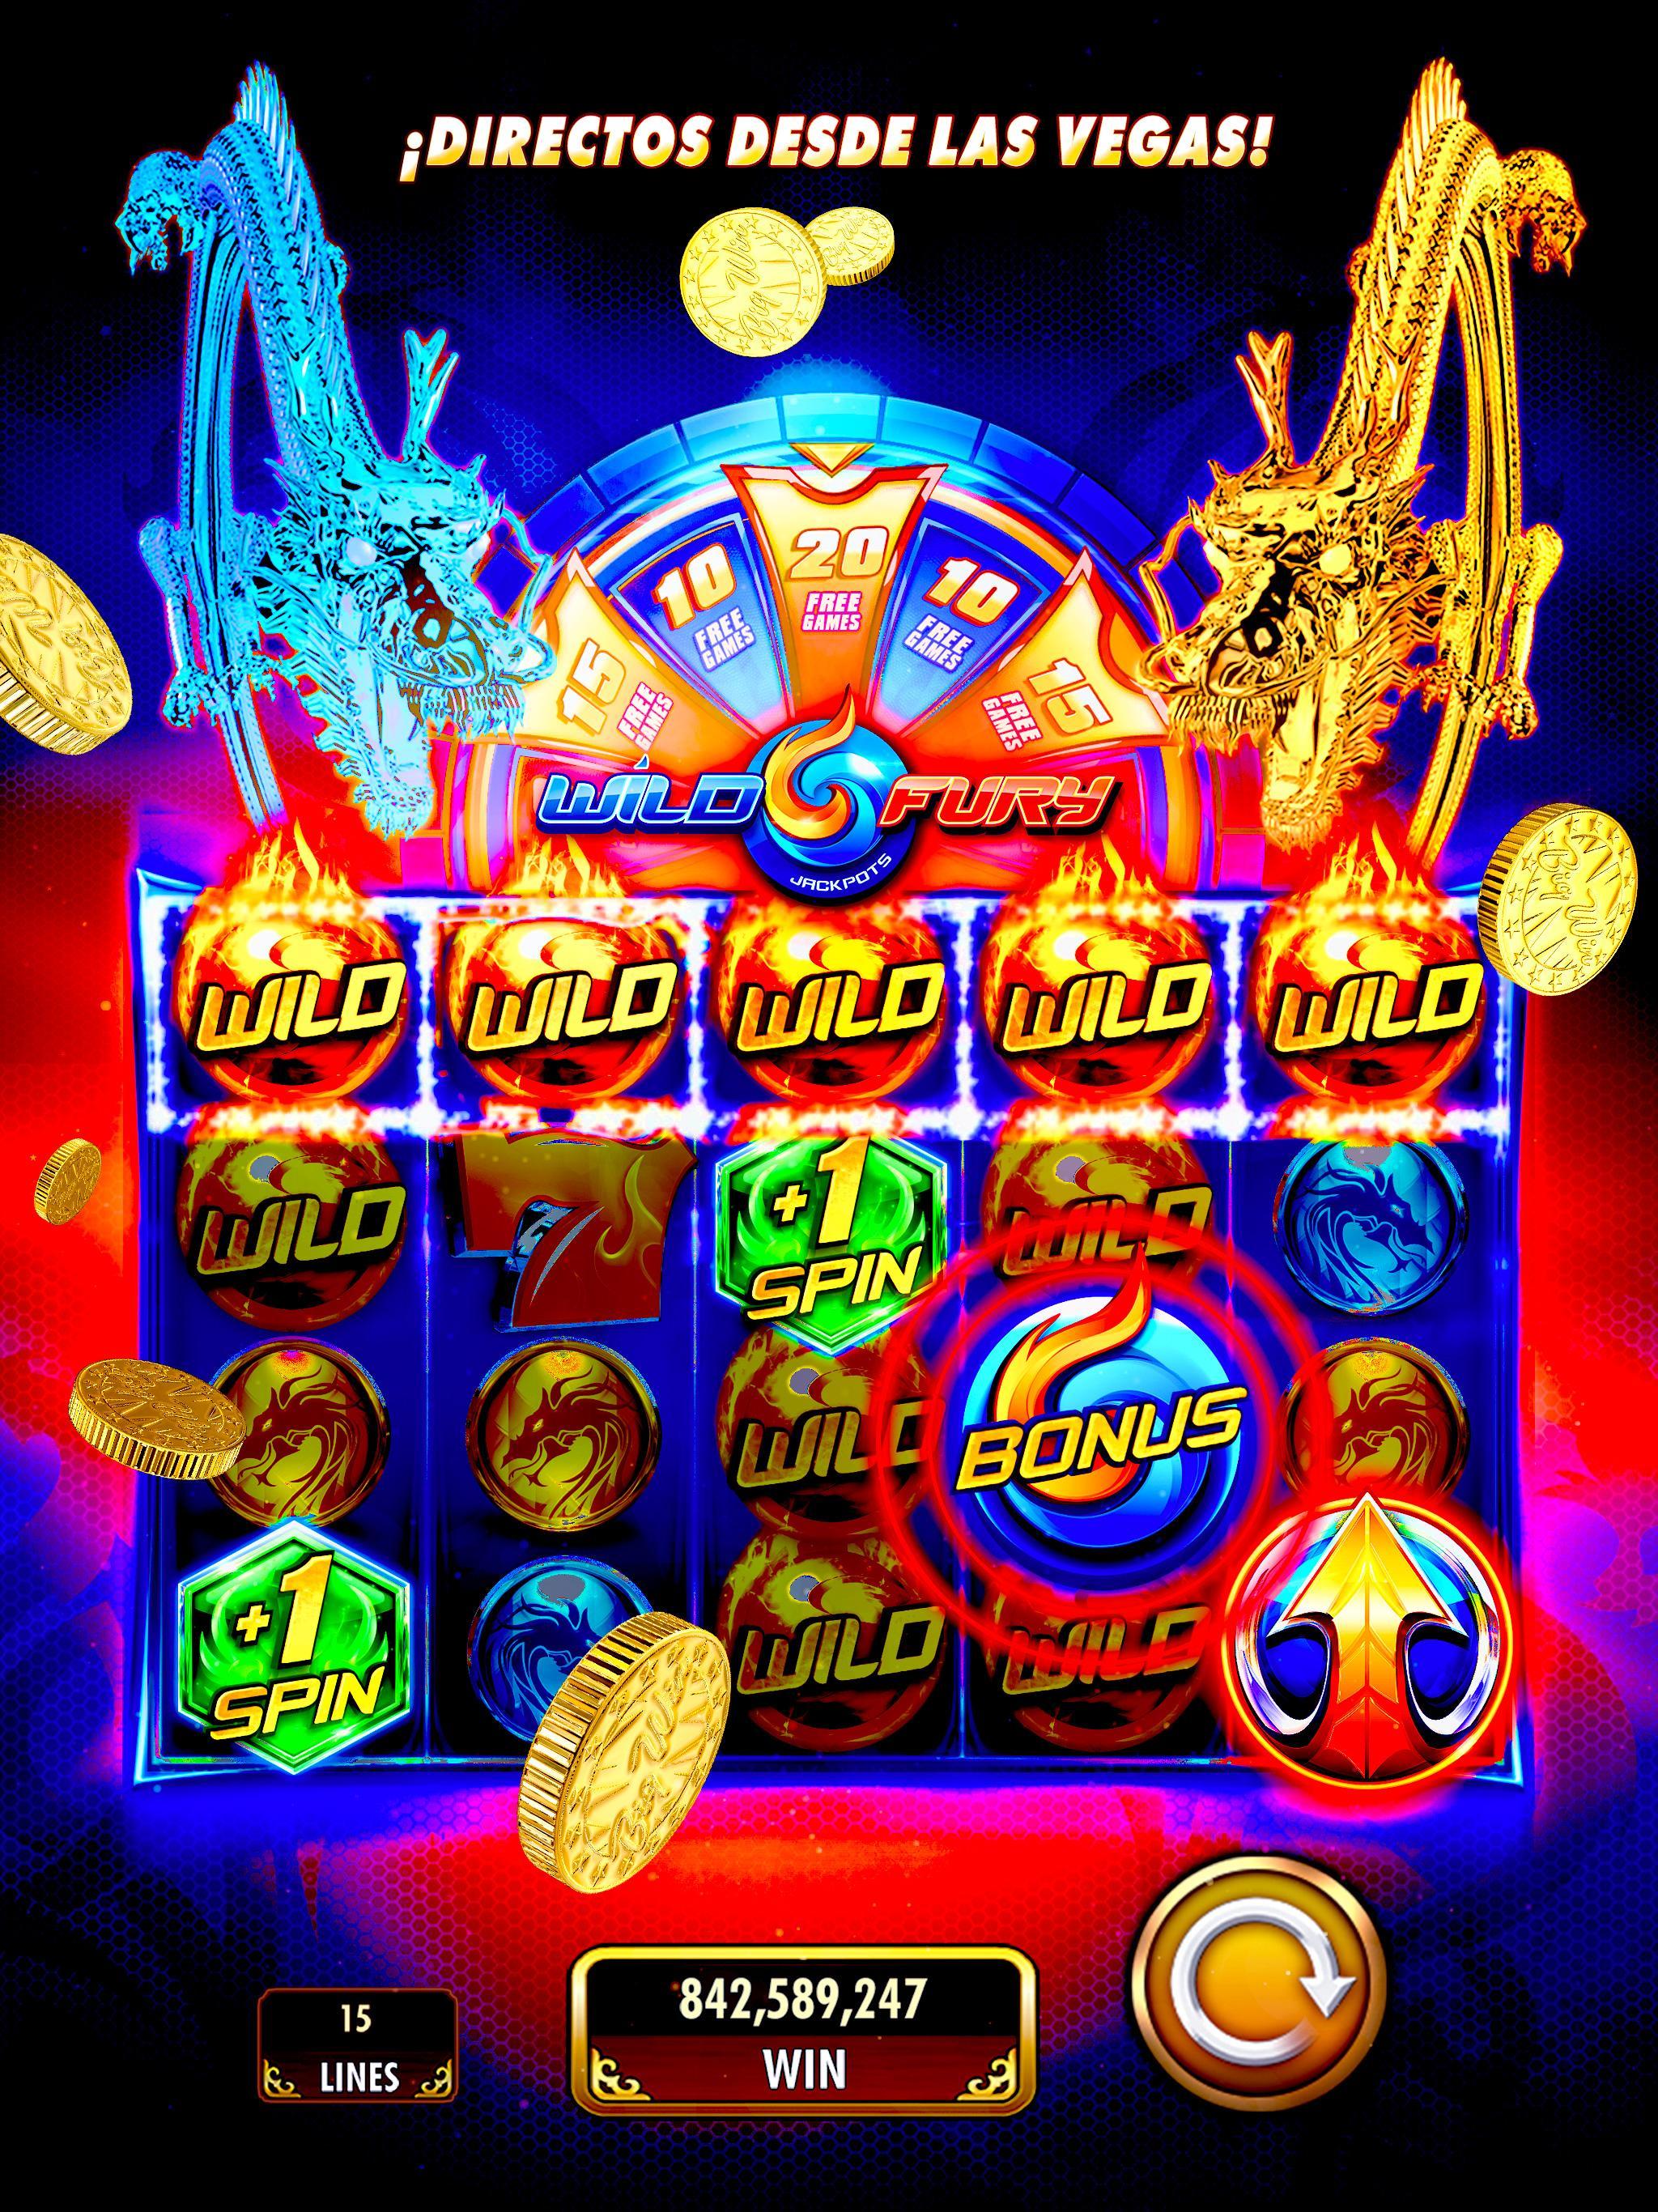 Doubledown casino slots games blackjack roulette Big fish online